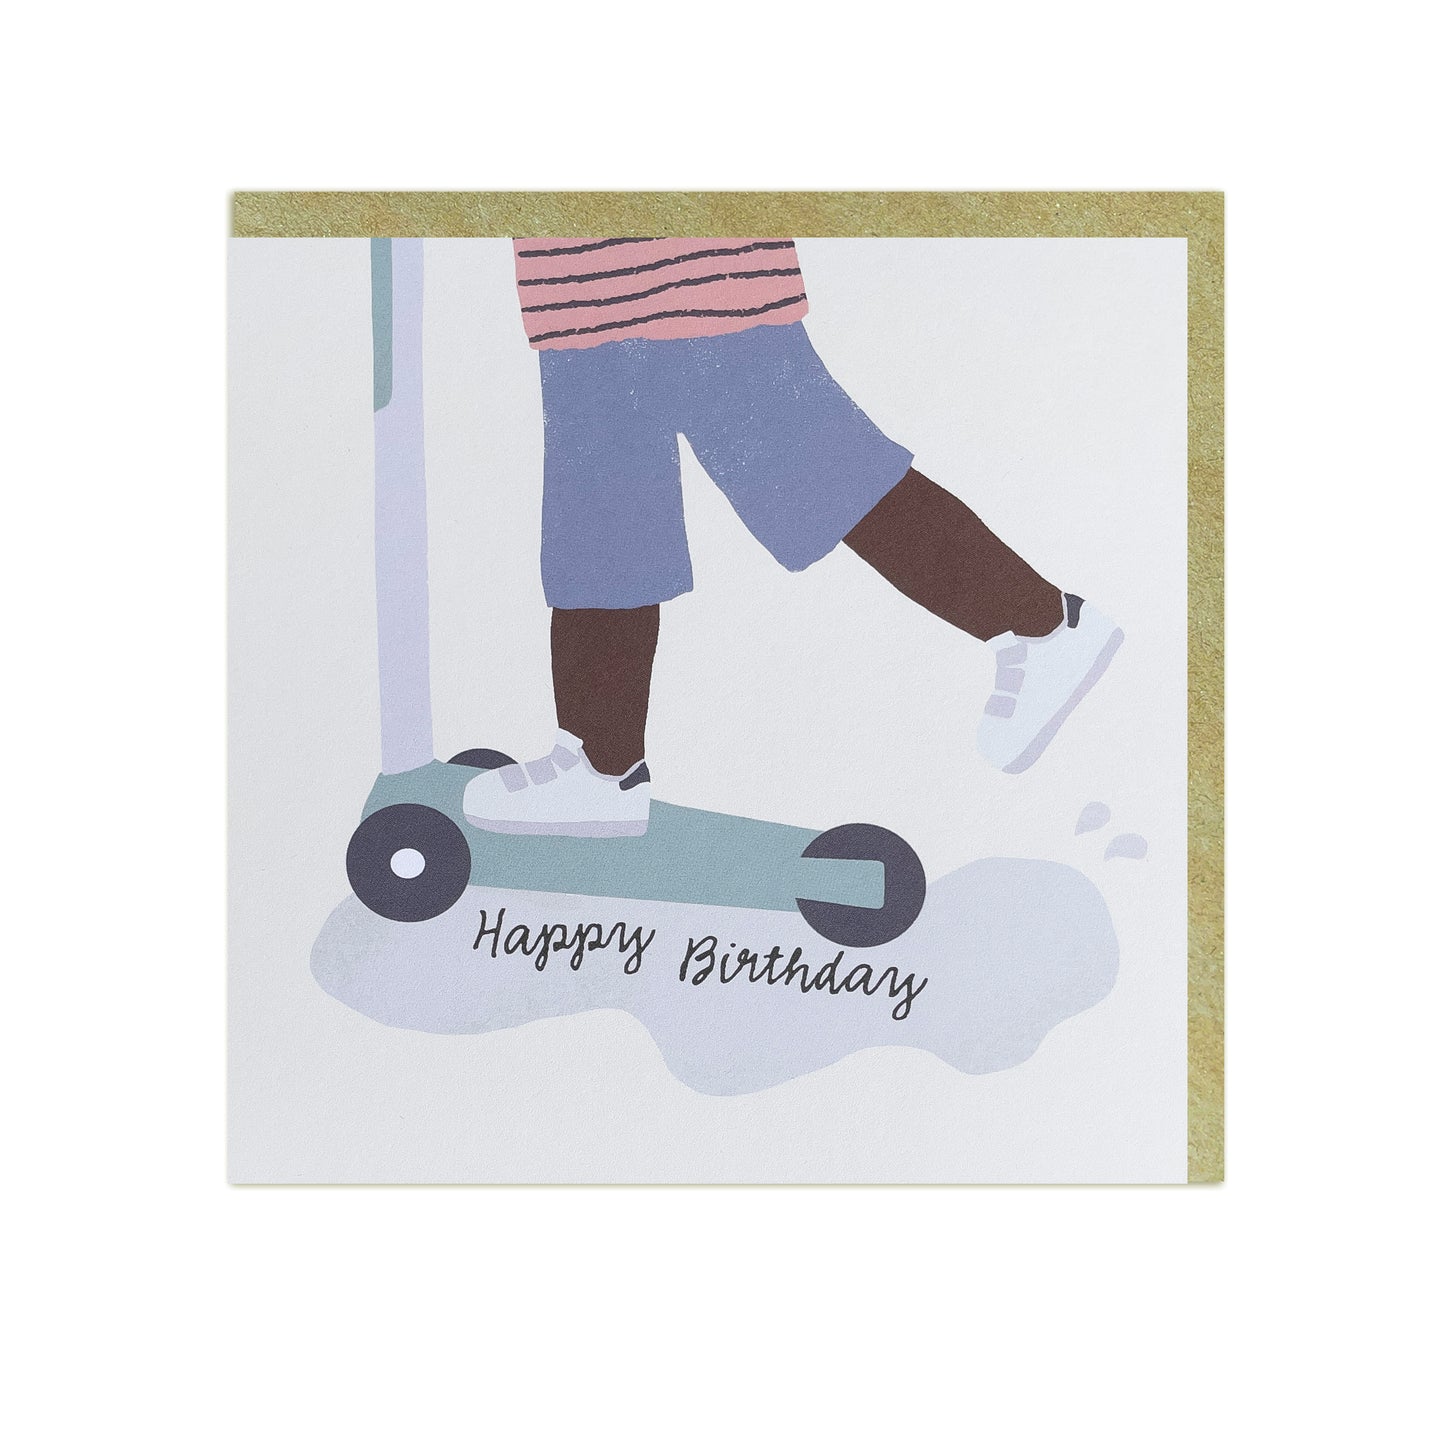 Happy Birthday Scooter Boy! Black birthday cards, mixed race, mixed heritage.